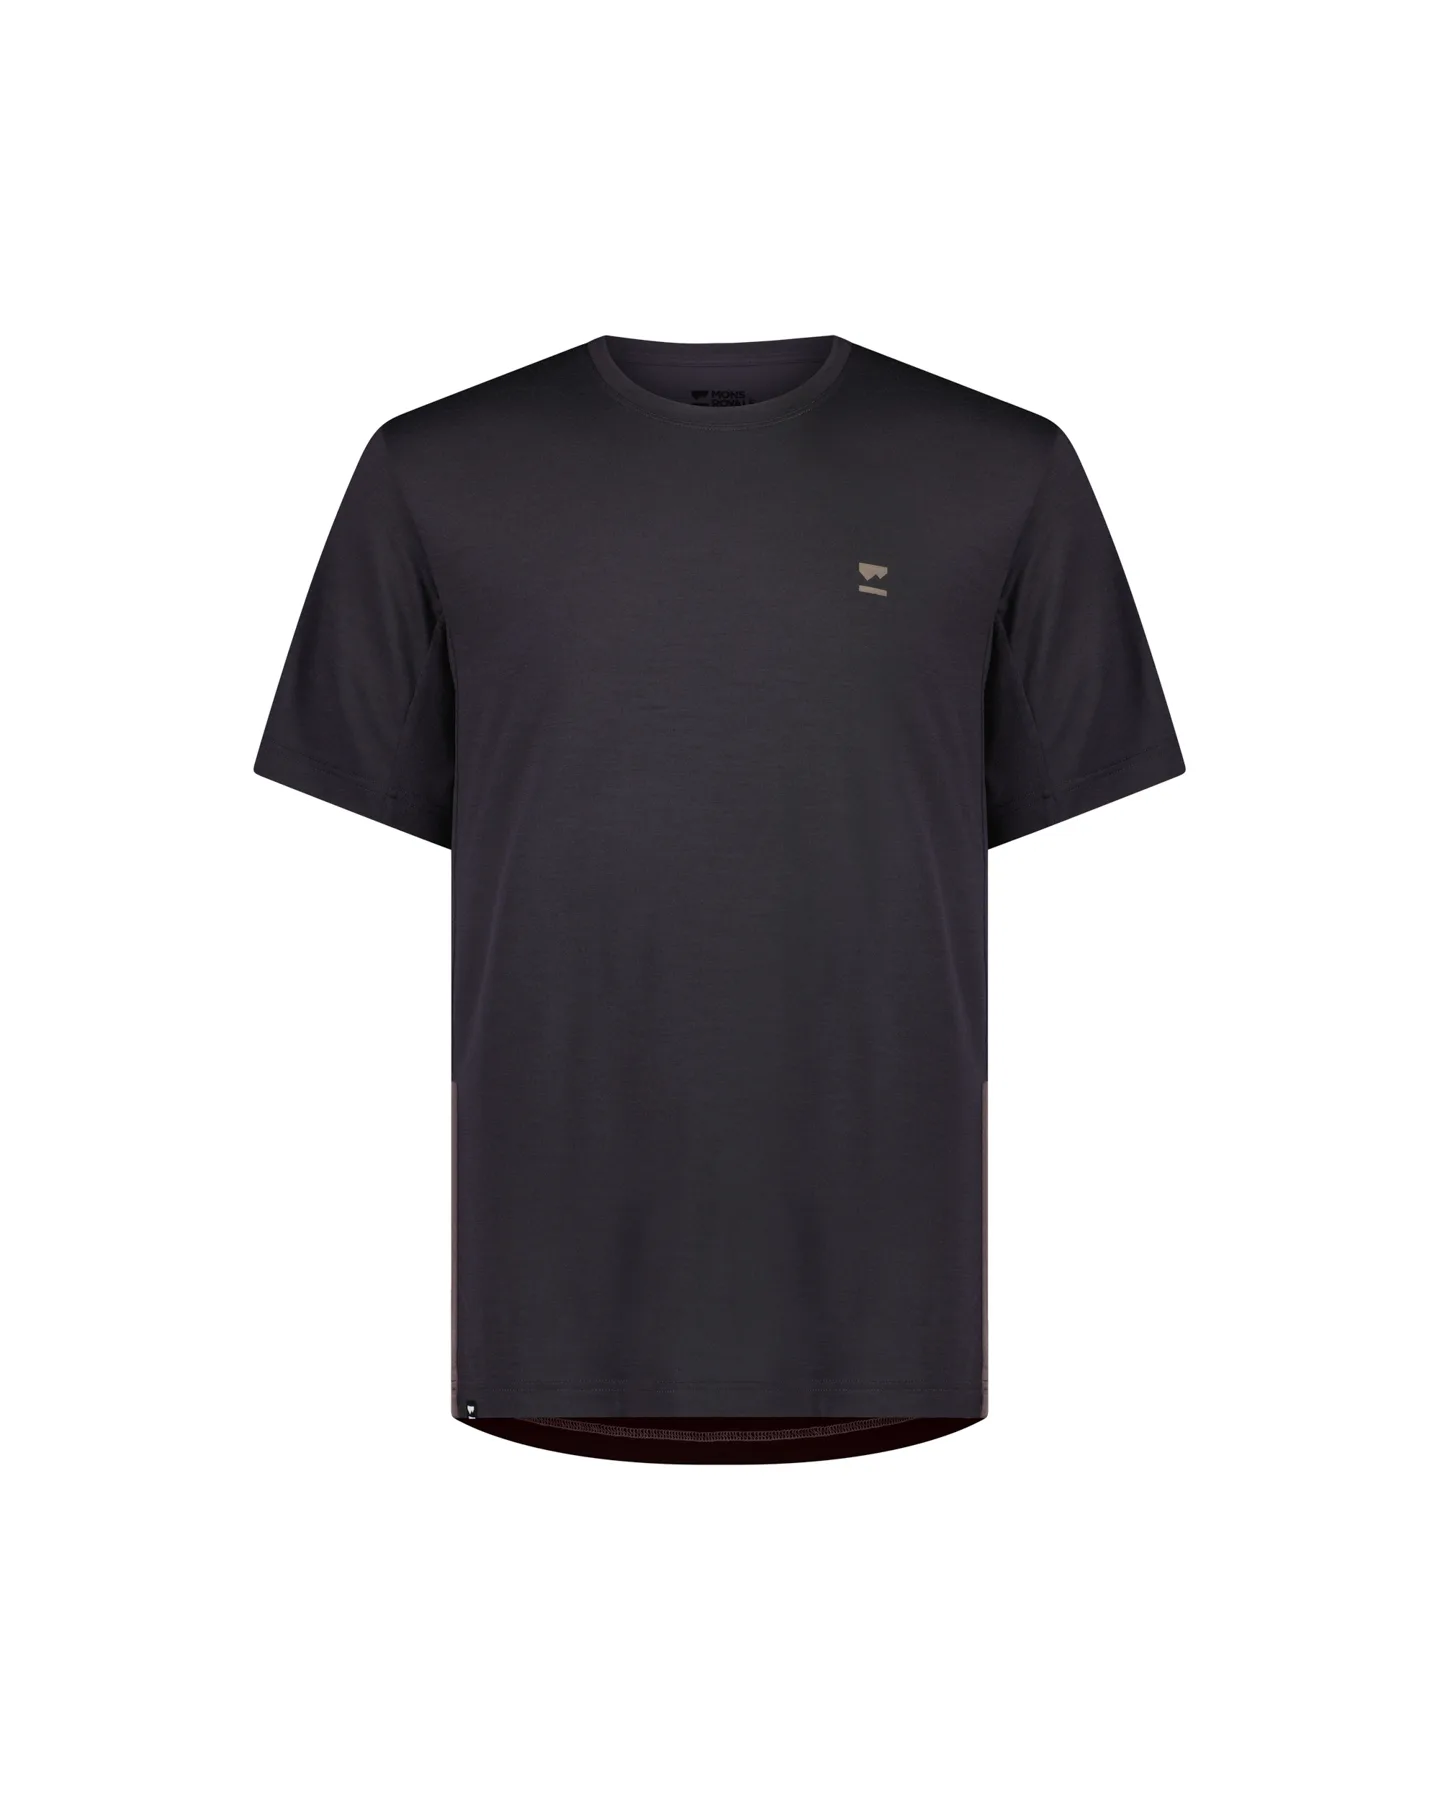 Mons Royale - Tarn Merino Shift T-Shirt - Iron / Shale - Brun, Grå XL